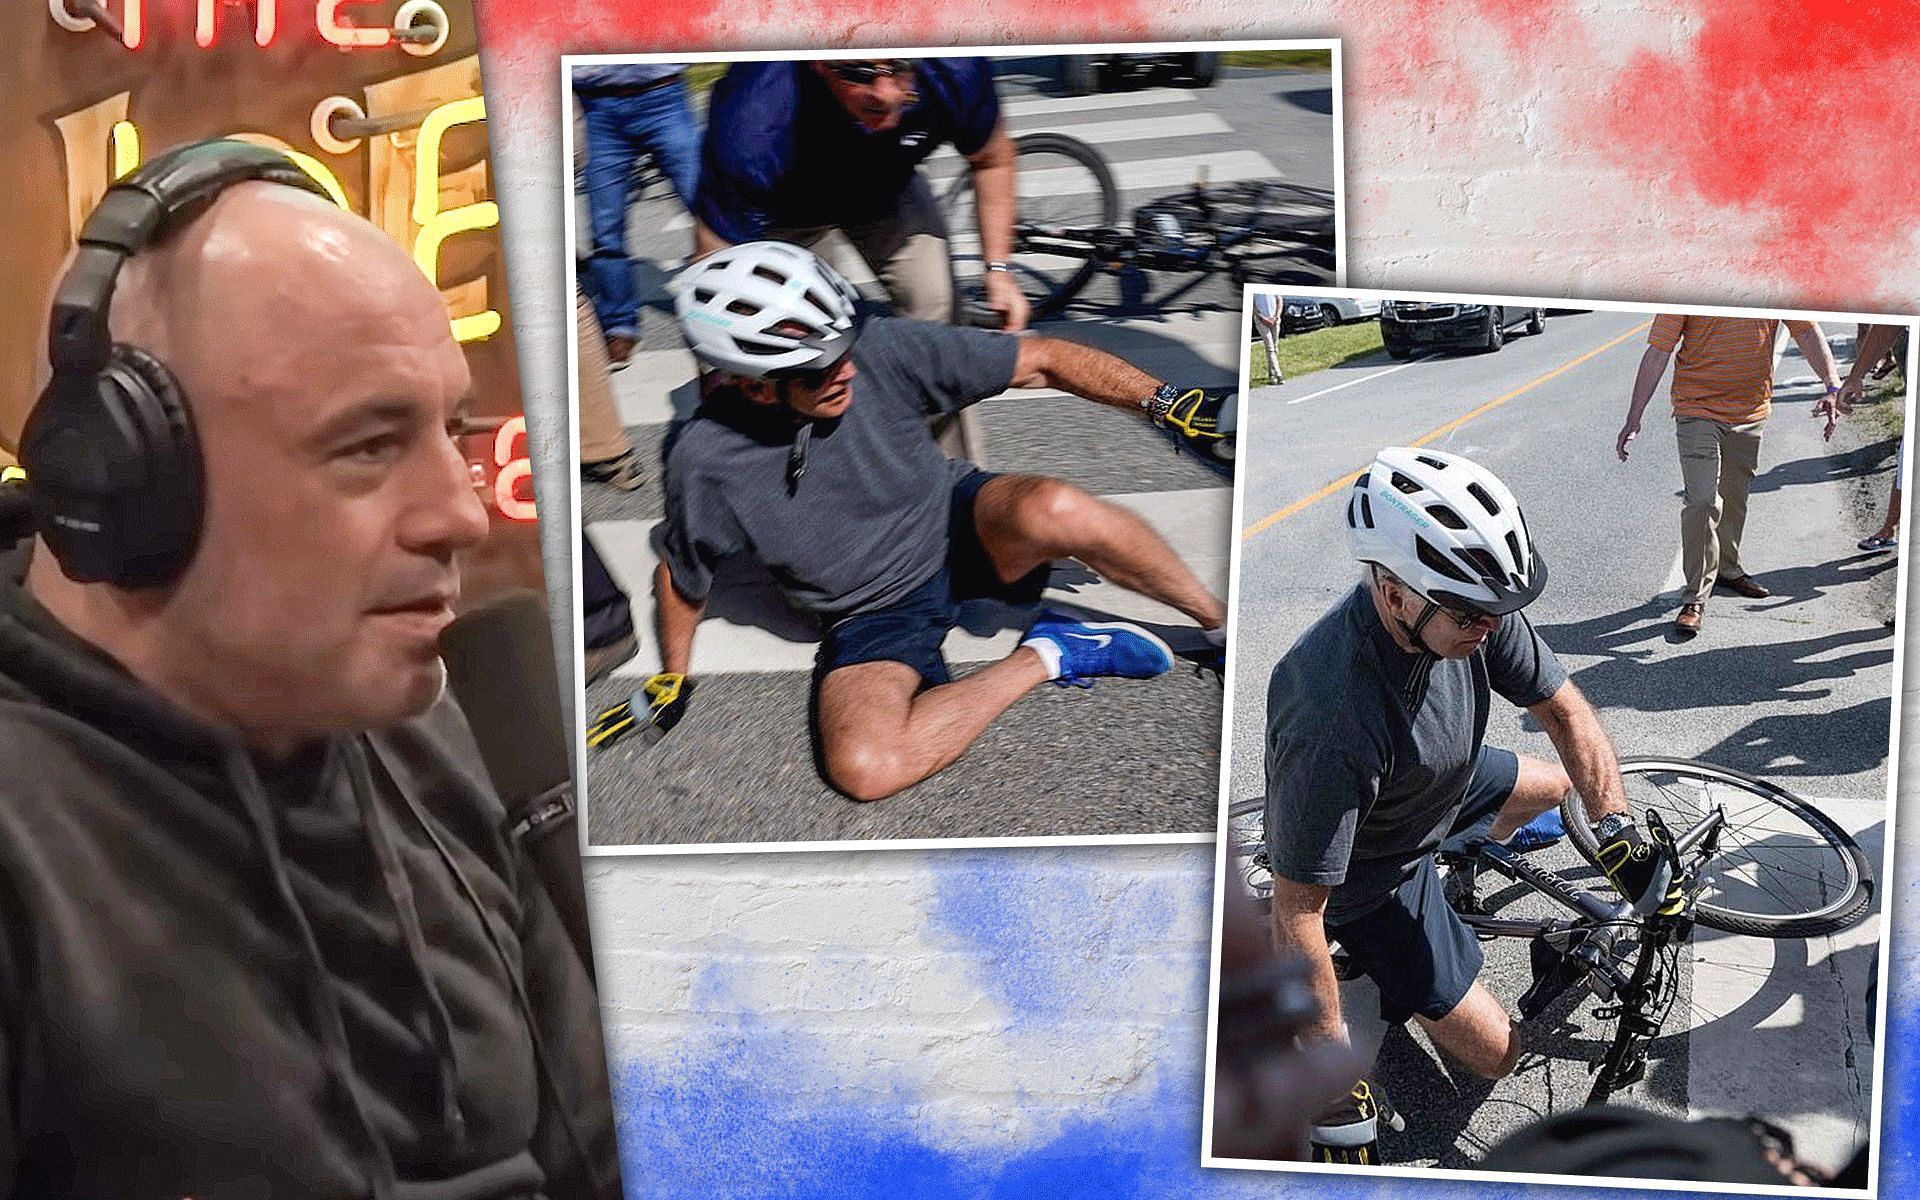 Video: Biden says 'I'm good' after falling off bike in Delaware